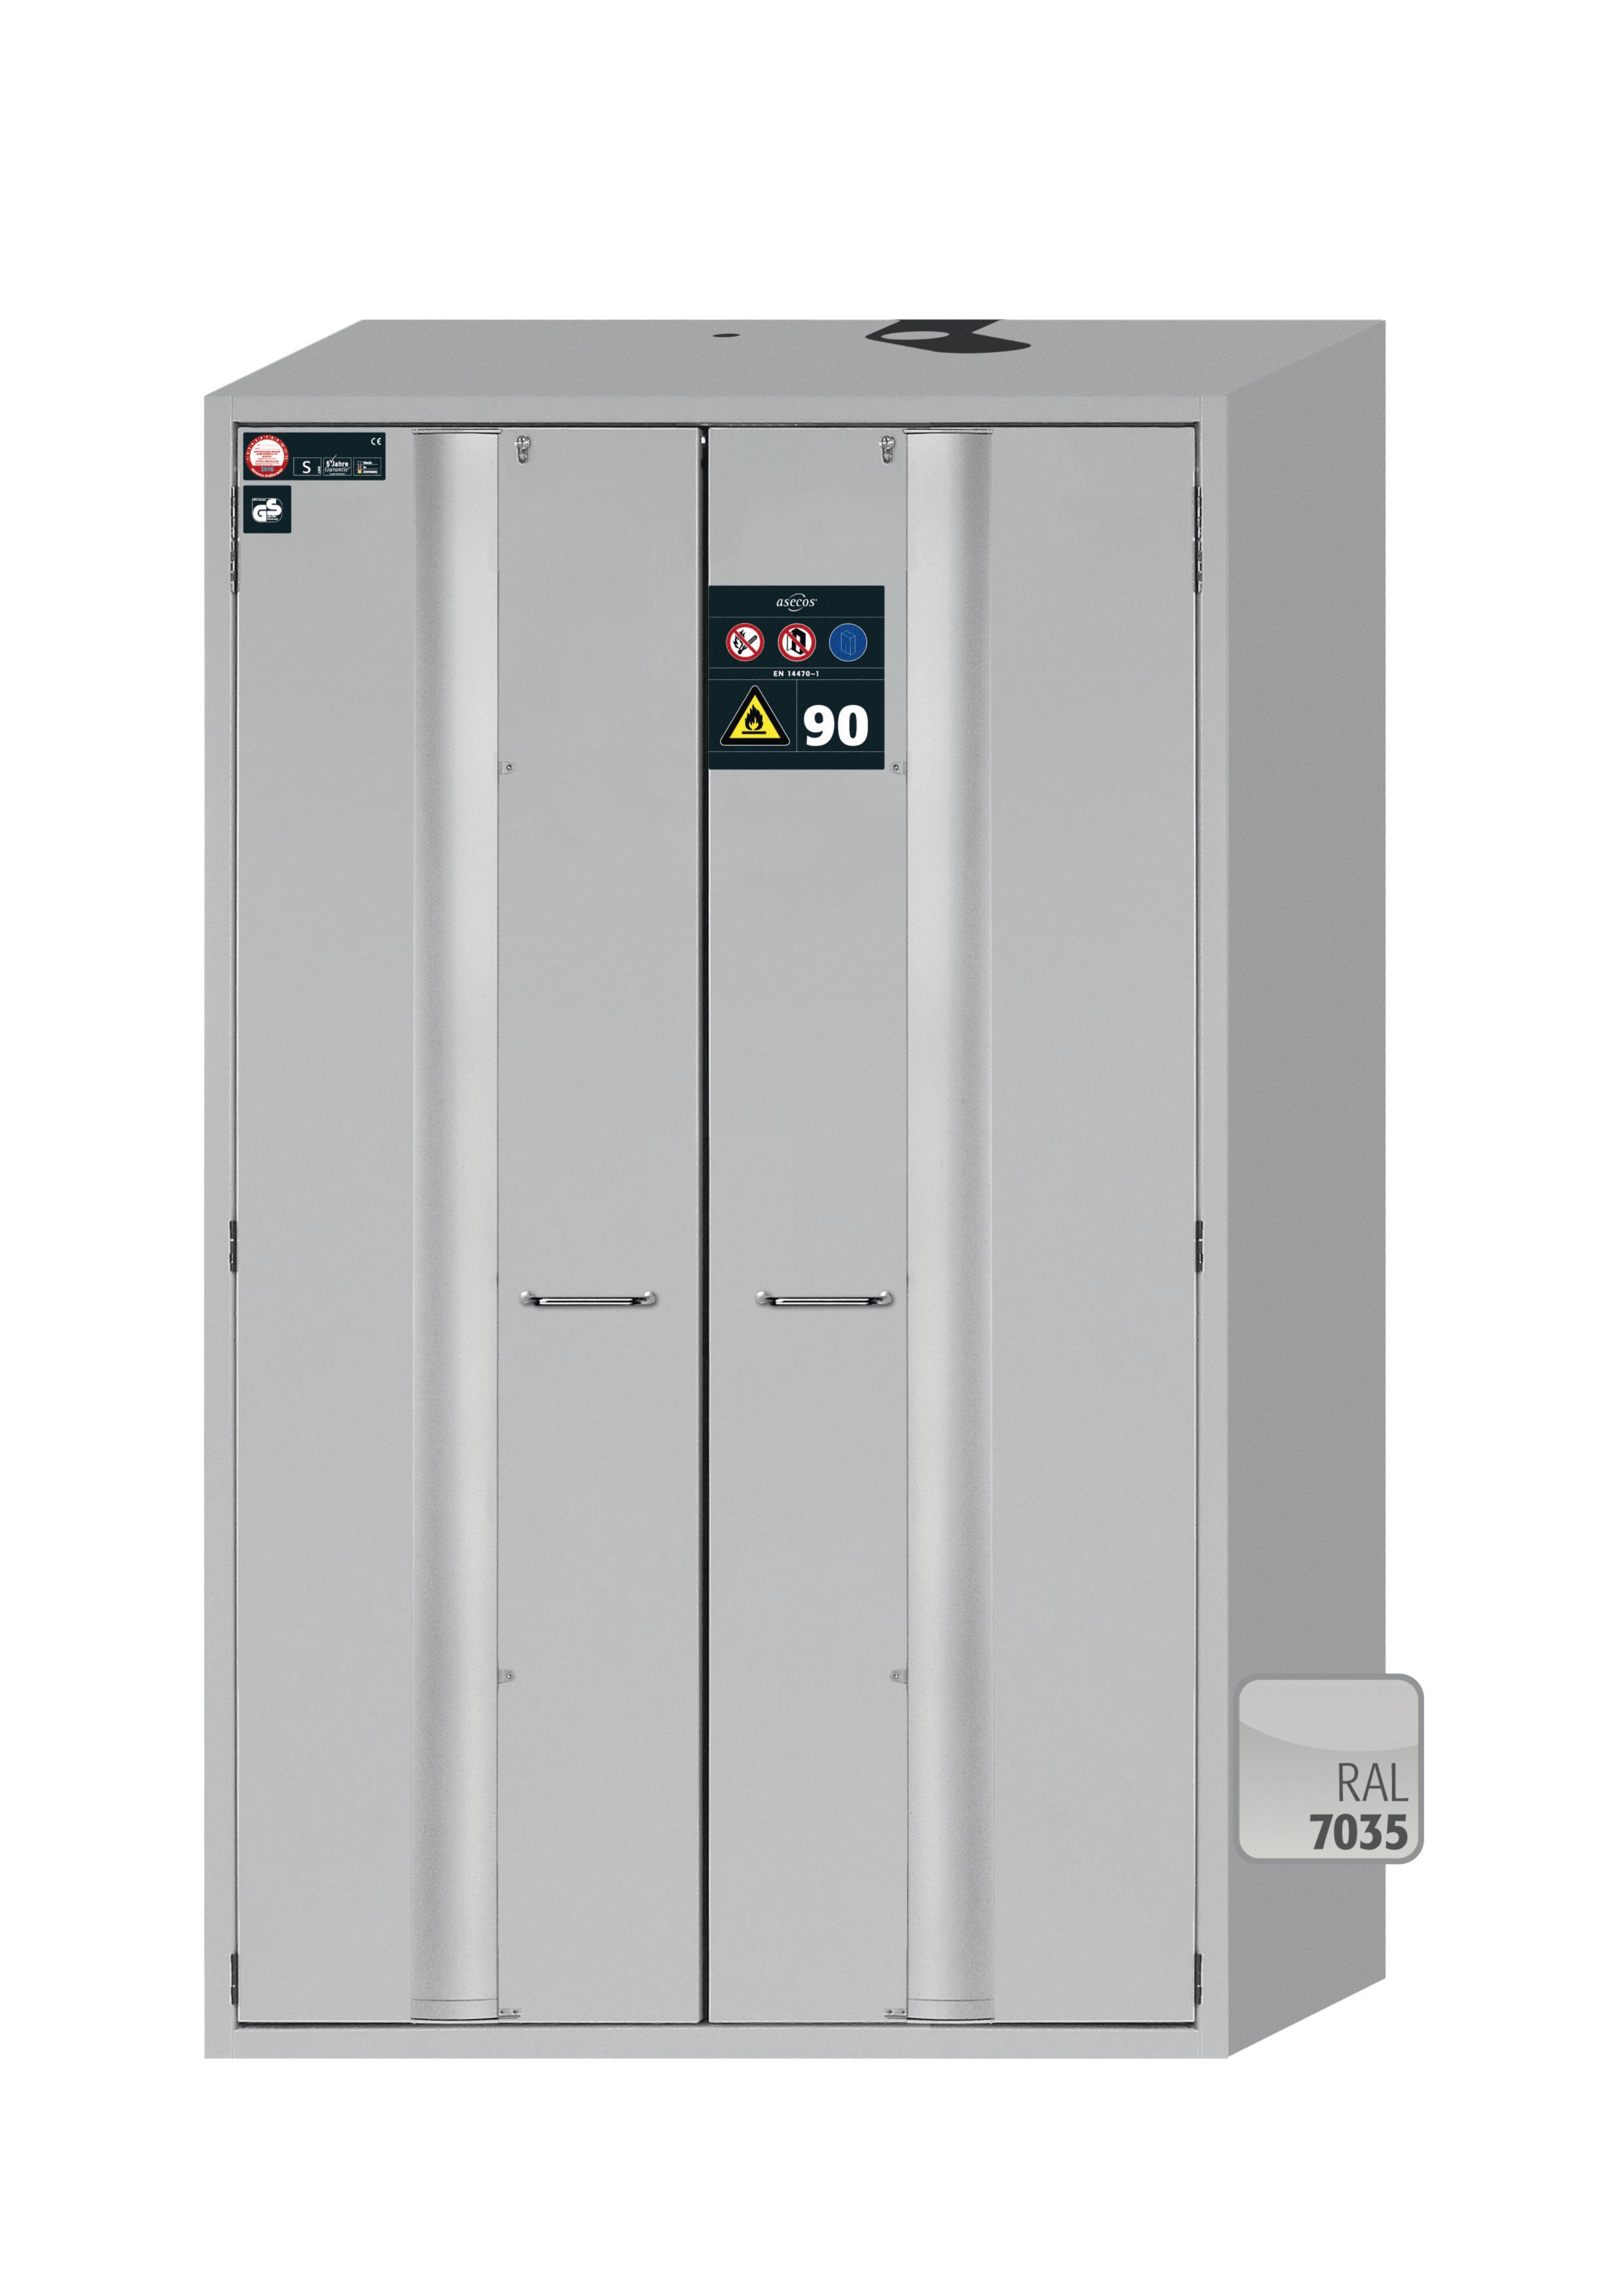 Type 90 safety storage cabinet S-PHOENIX-90 model S90.196.120.FDAS in light grey RAL 7035 with 2x tray shelf (standard) (polypropylene),